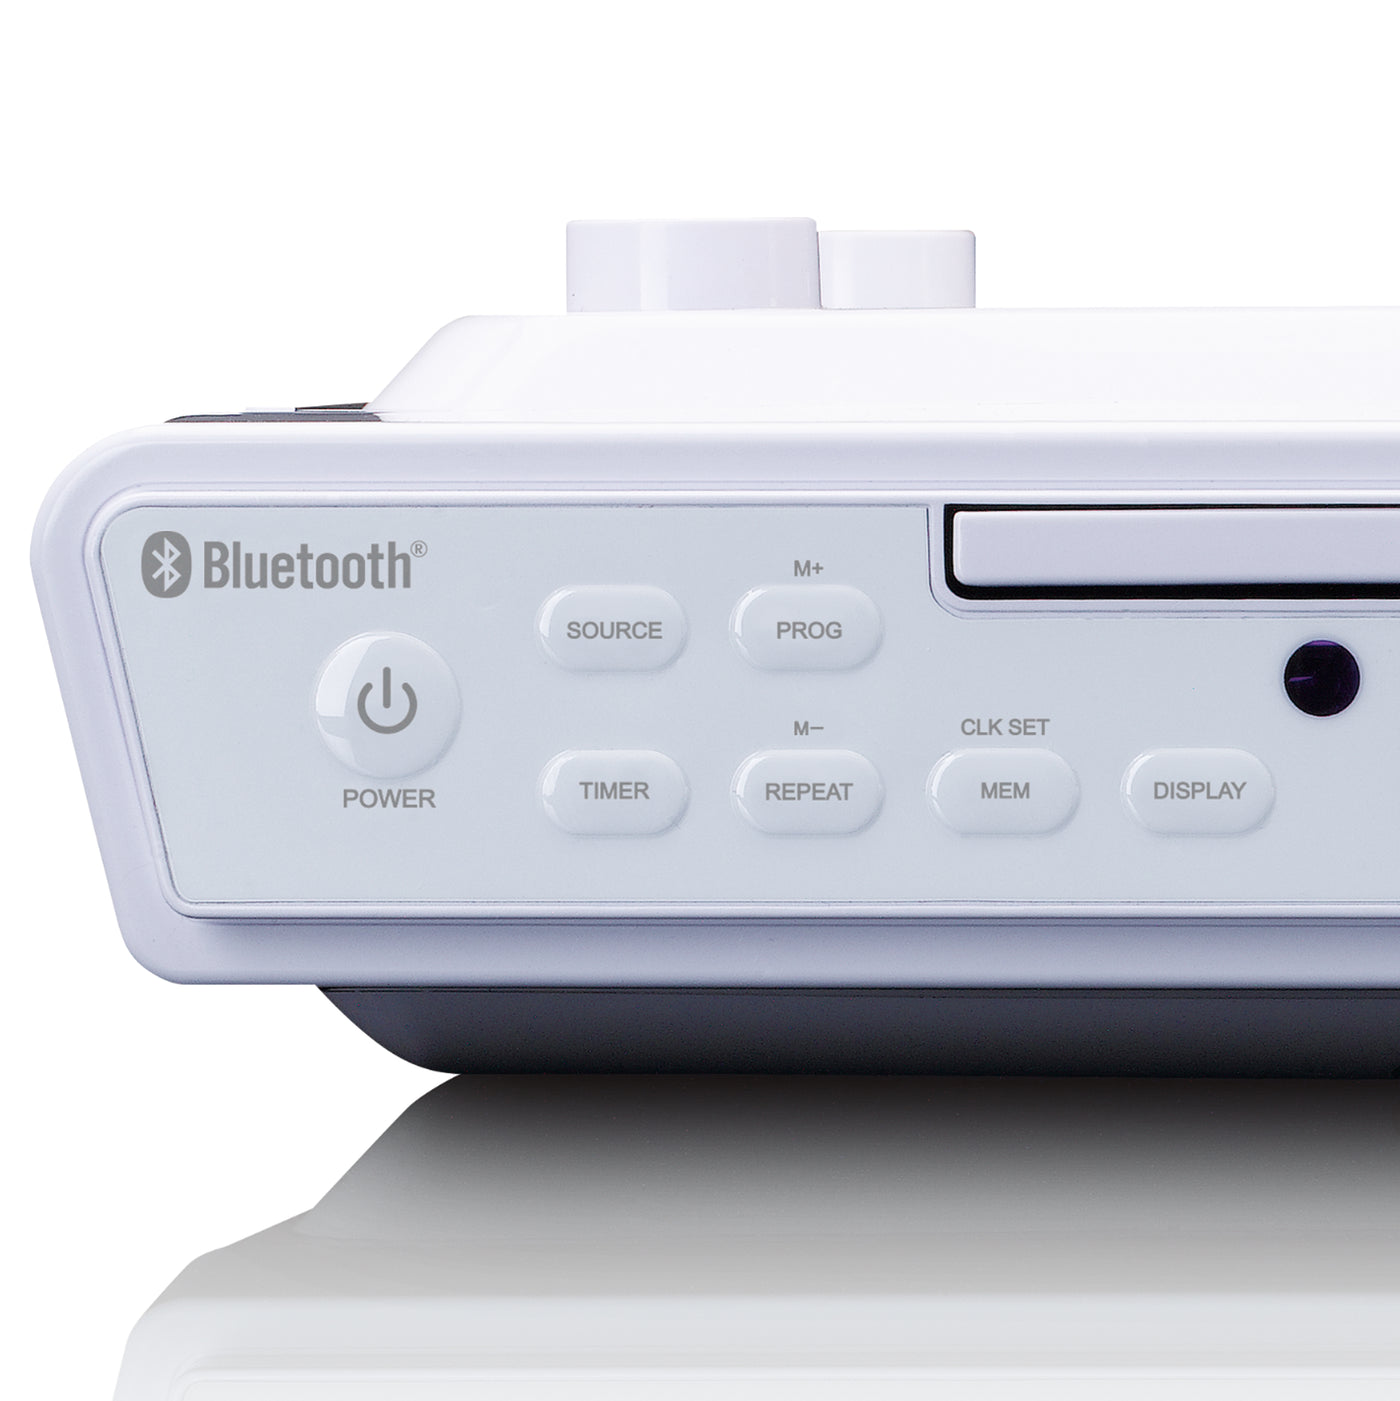 LENCO KCR-150WH - FM Keukenradio met CD speler en Bluetooth® - Wit